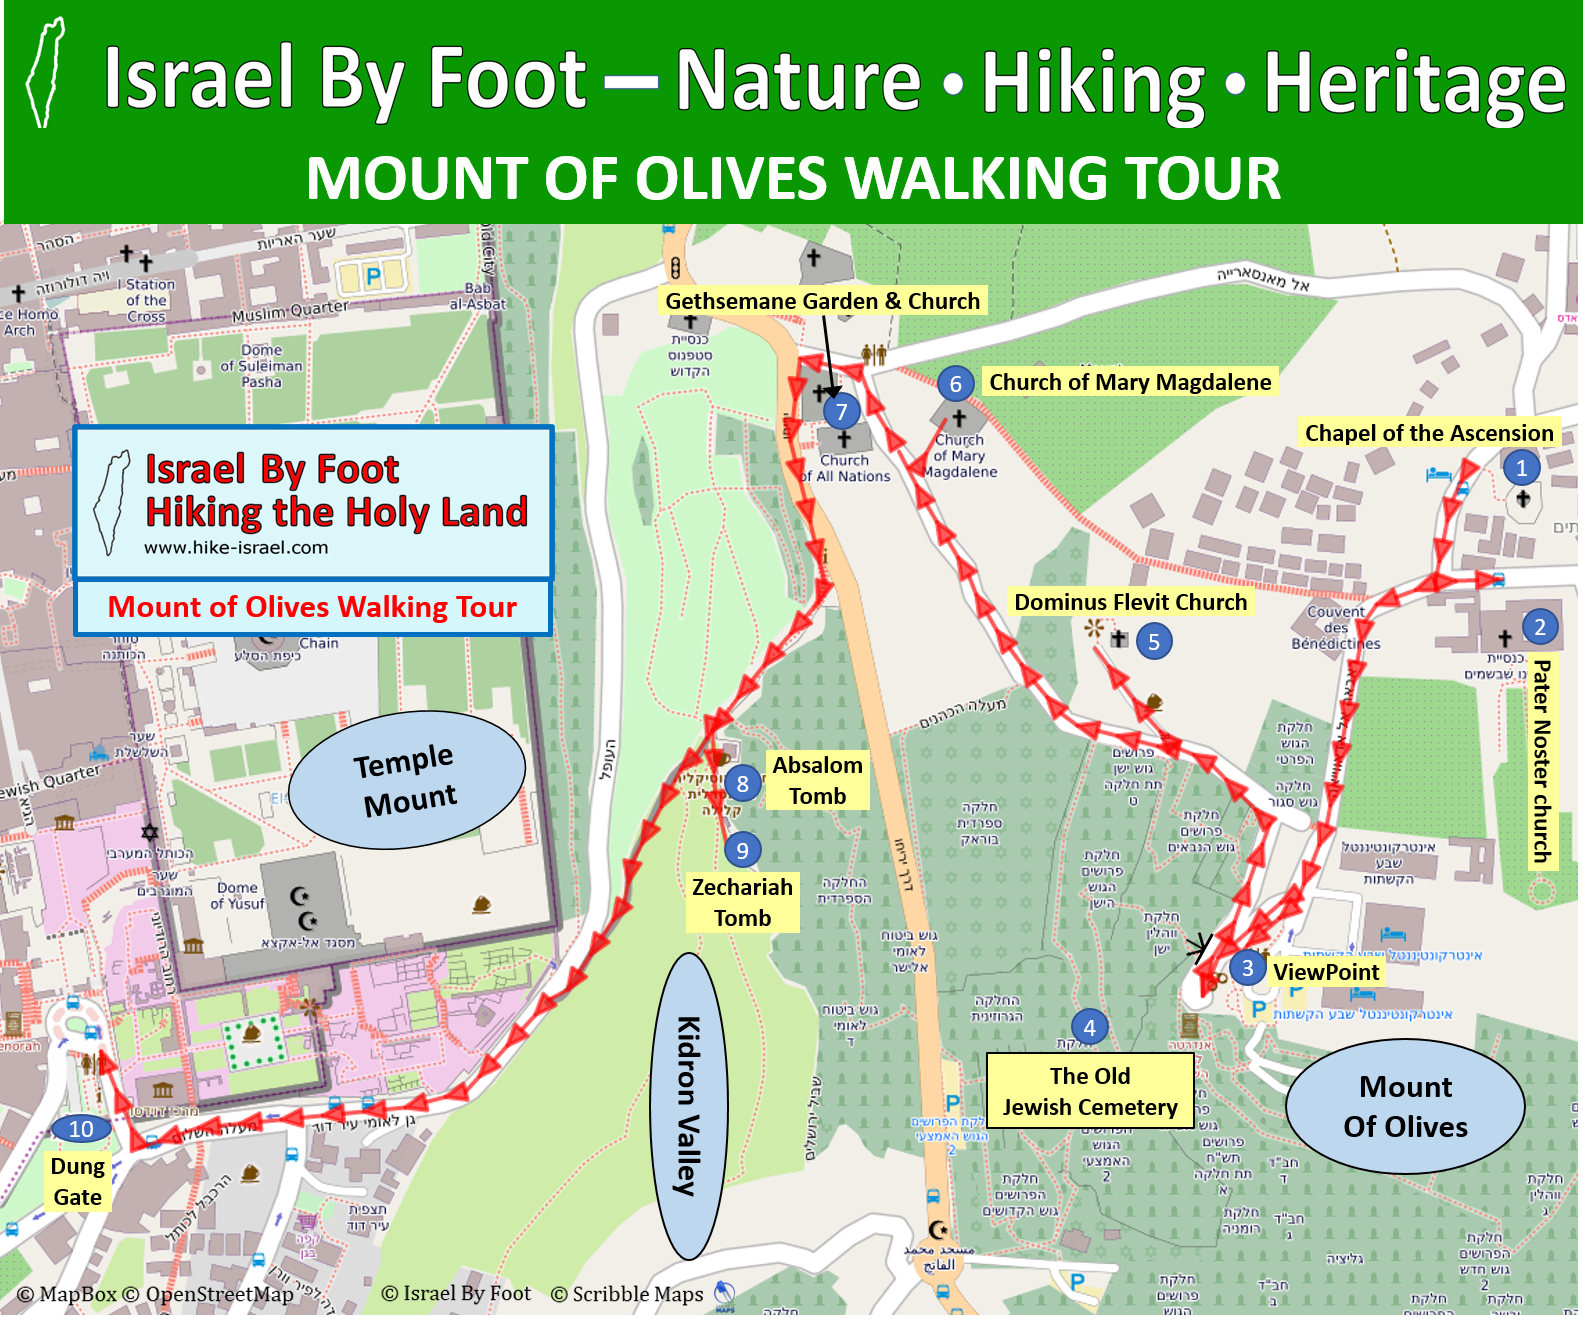 Mount-of-Olives-Walking-Tour-Map.png